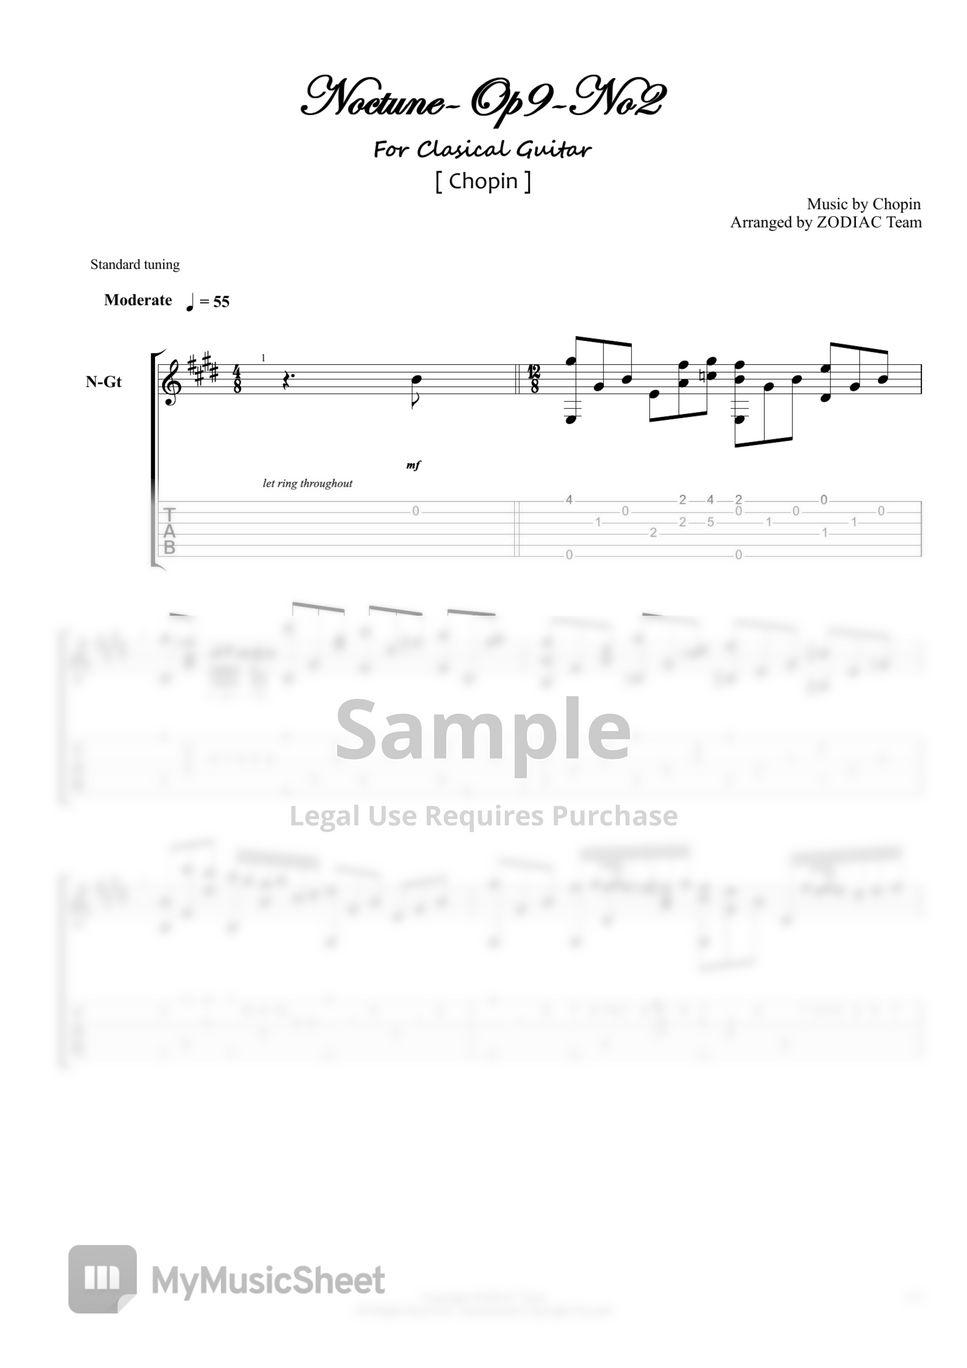 Chopin(쇼팽) - Nocturne-Op9-No2(녹턴) by ZODIAC Team